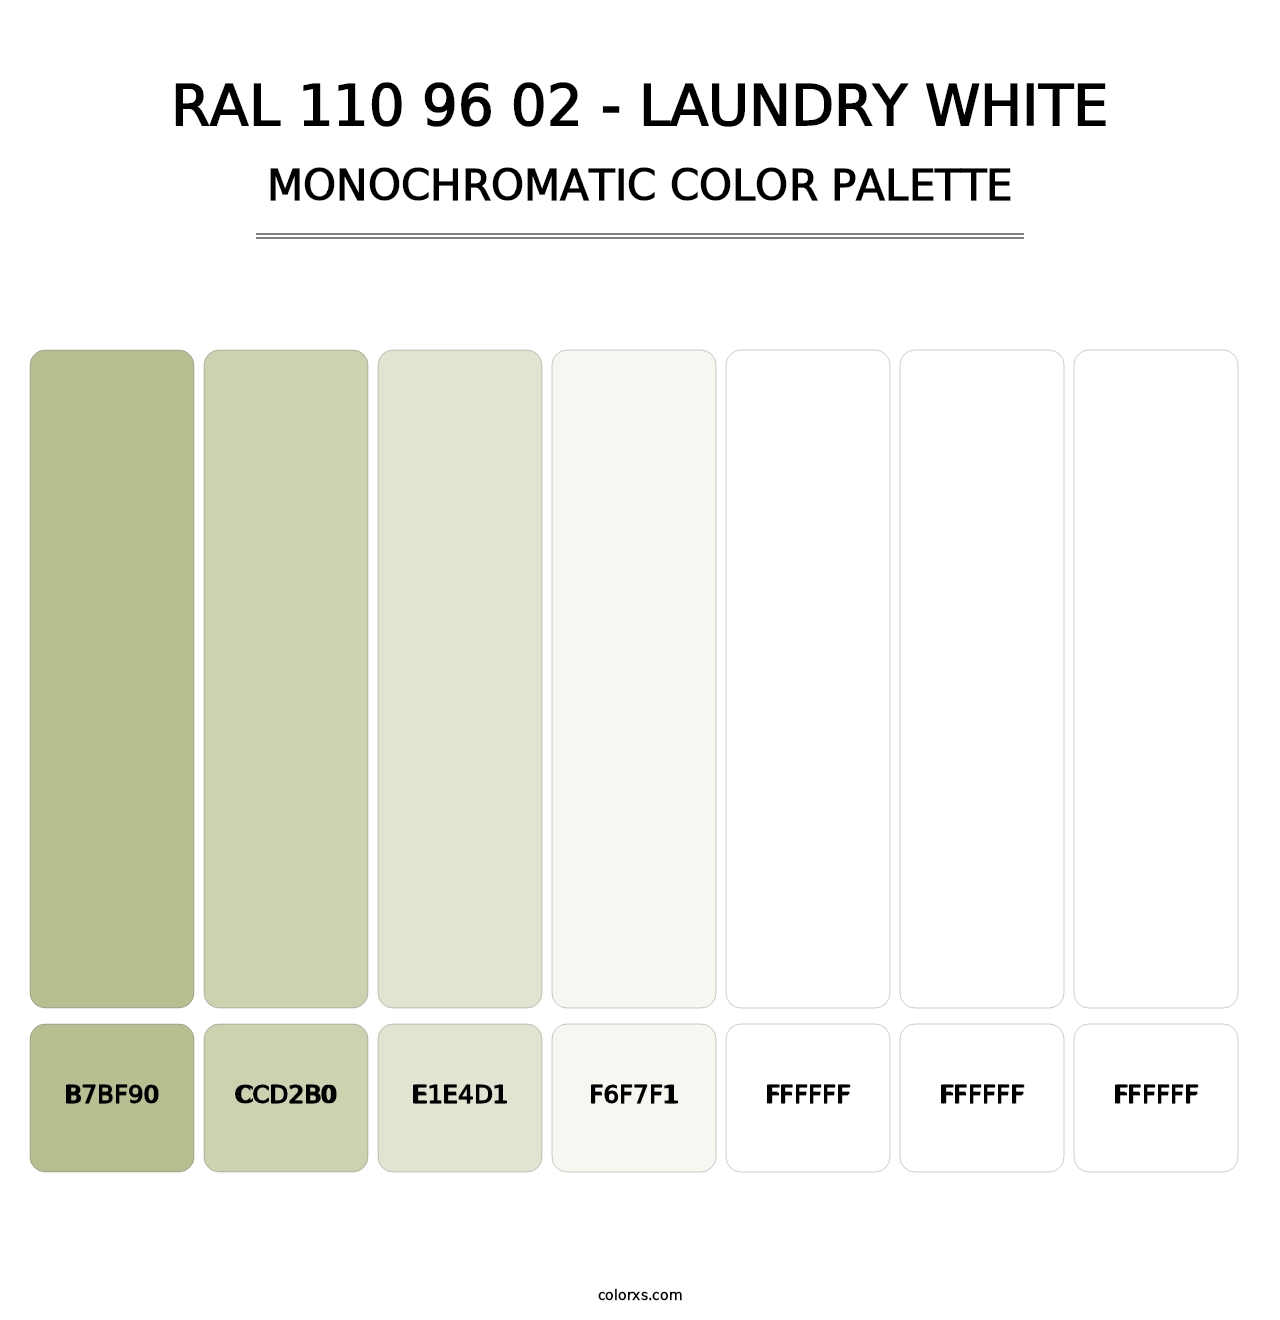 RAL 110 96 02 - Laundry White - Monochromatic Color Palette